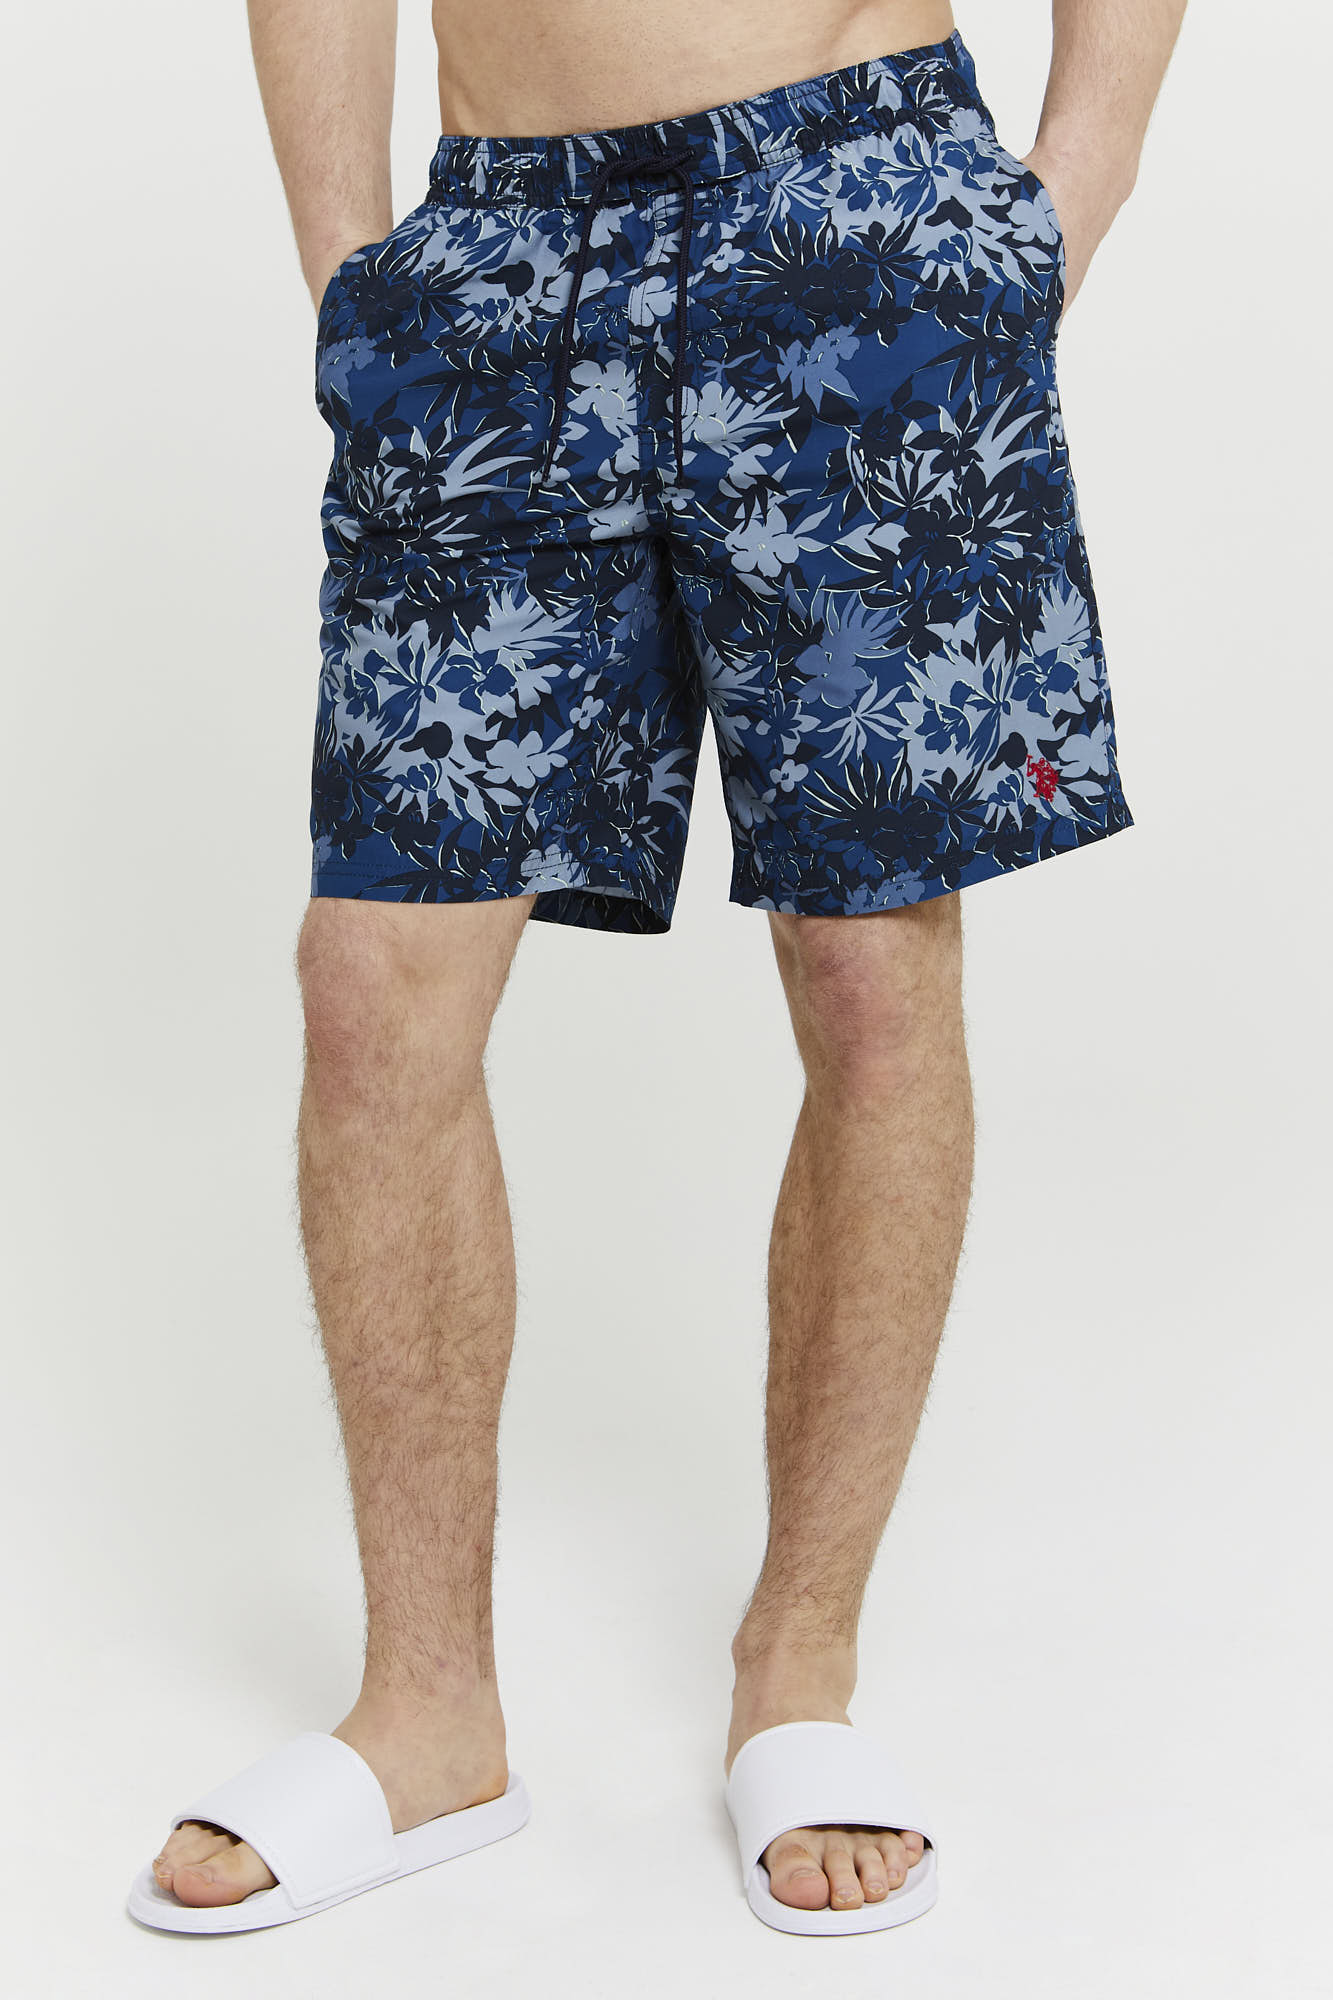 U.S. Polo Assn. Mens Palm Print Swim Shorts in Navy Blue